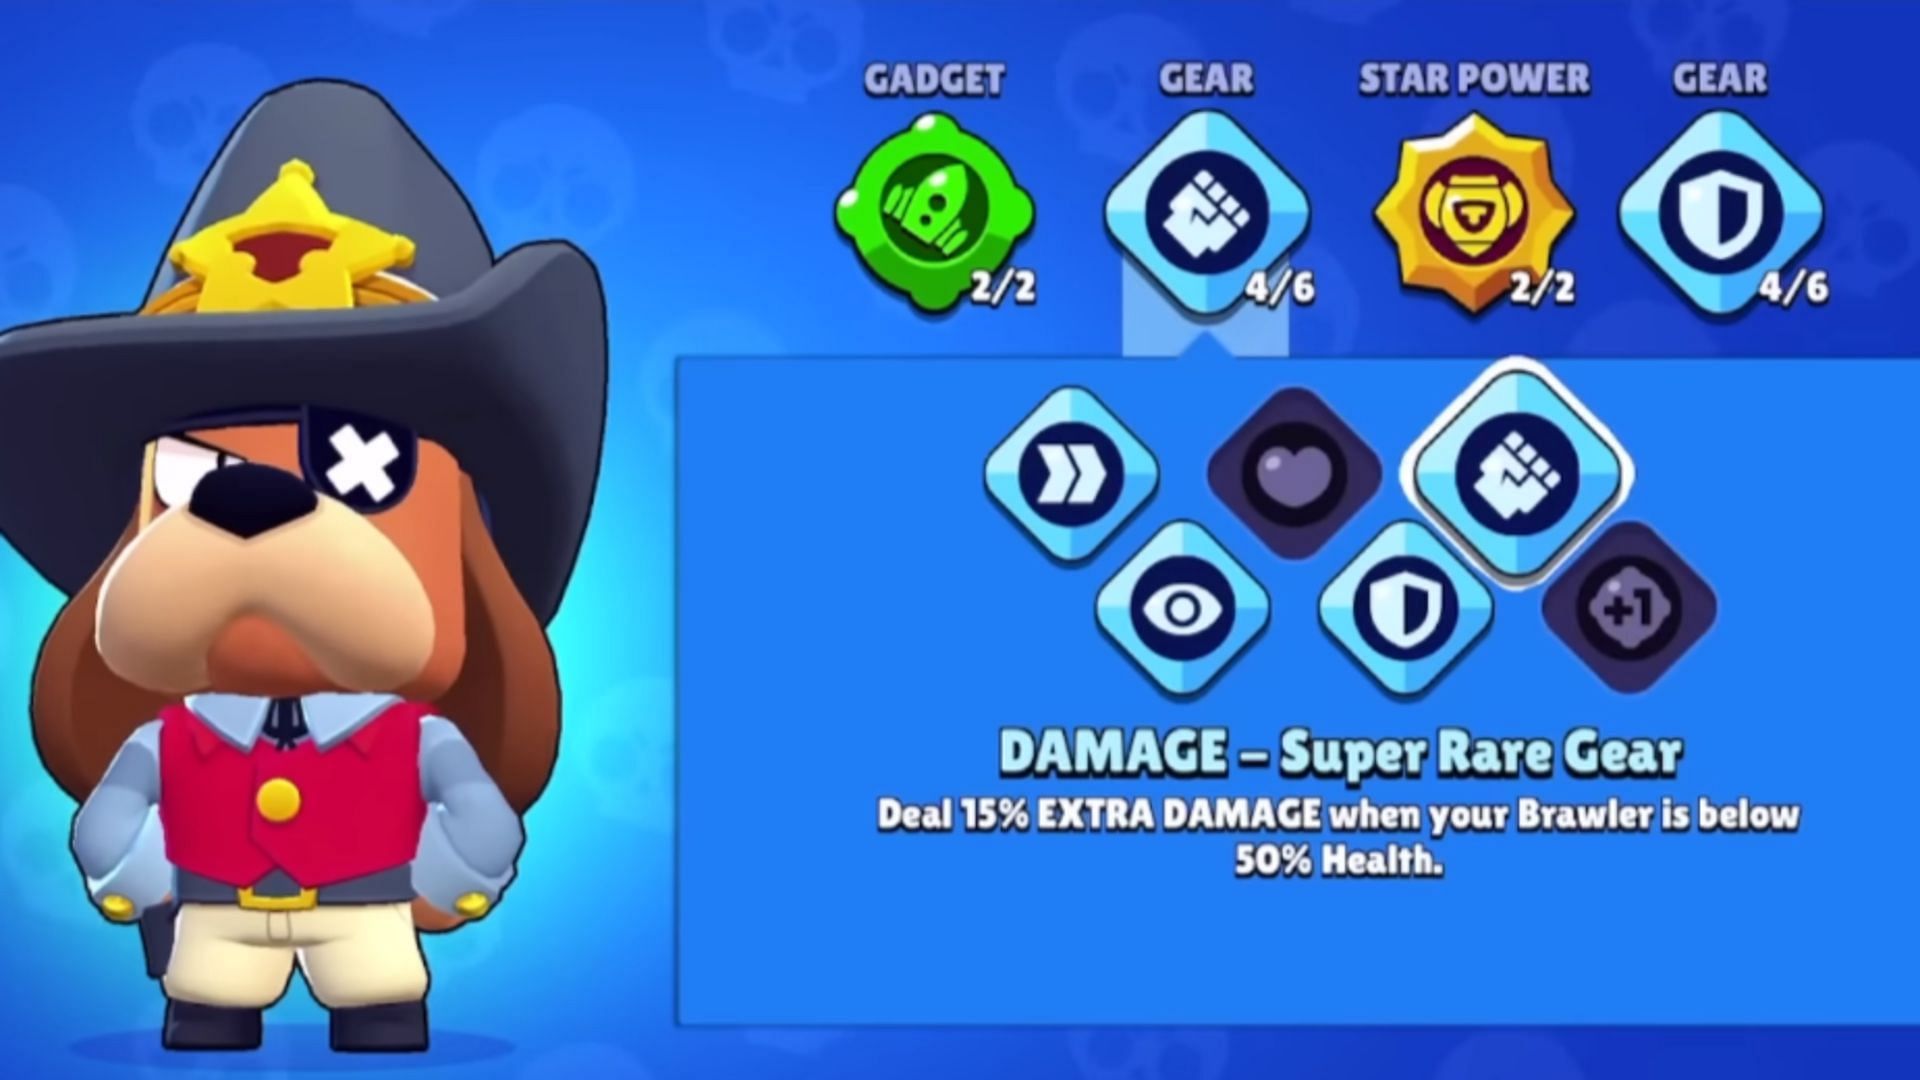 Damage - Super Rare Gear (Image via Supercell)